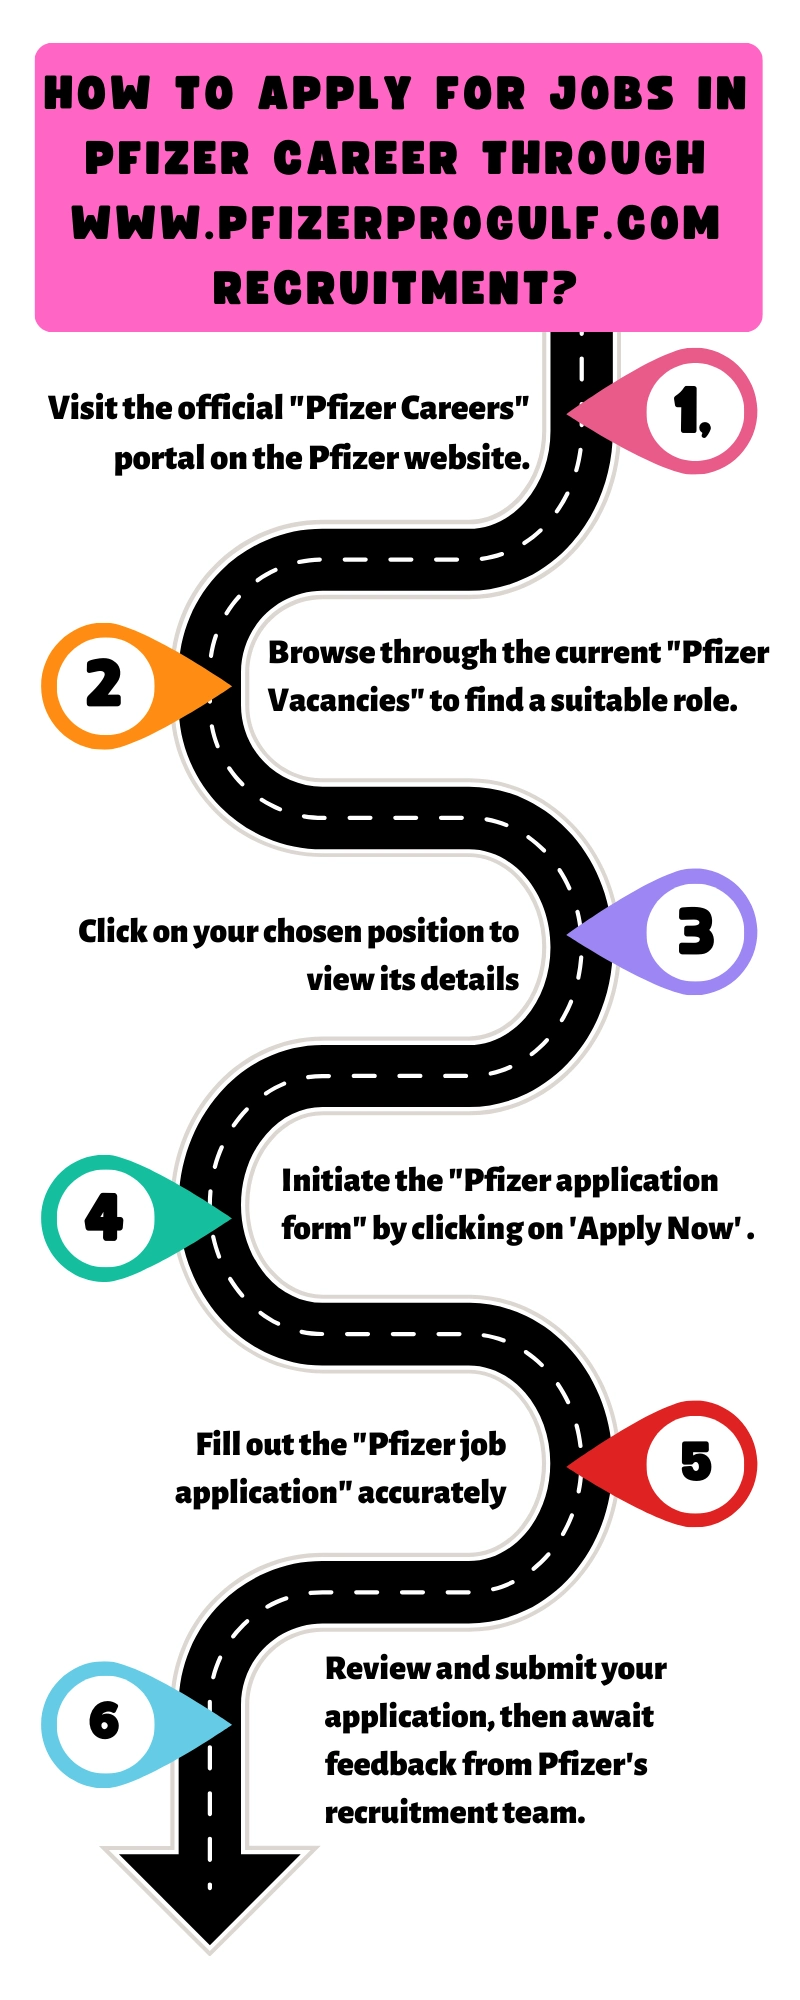 How to Apply for Jobs in Pfizer Career through www.pfizerprogulf.com recruitment?